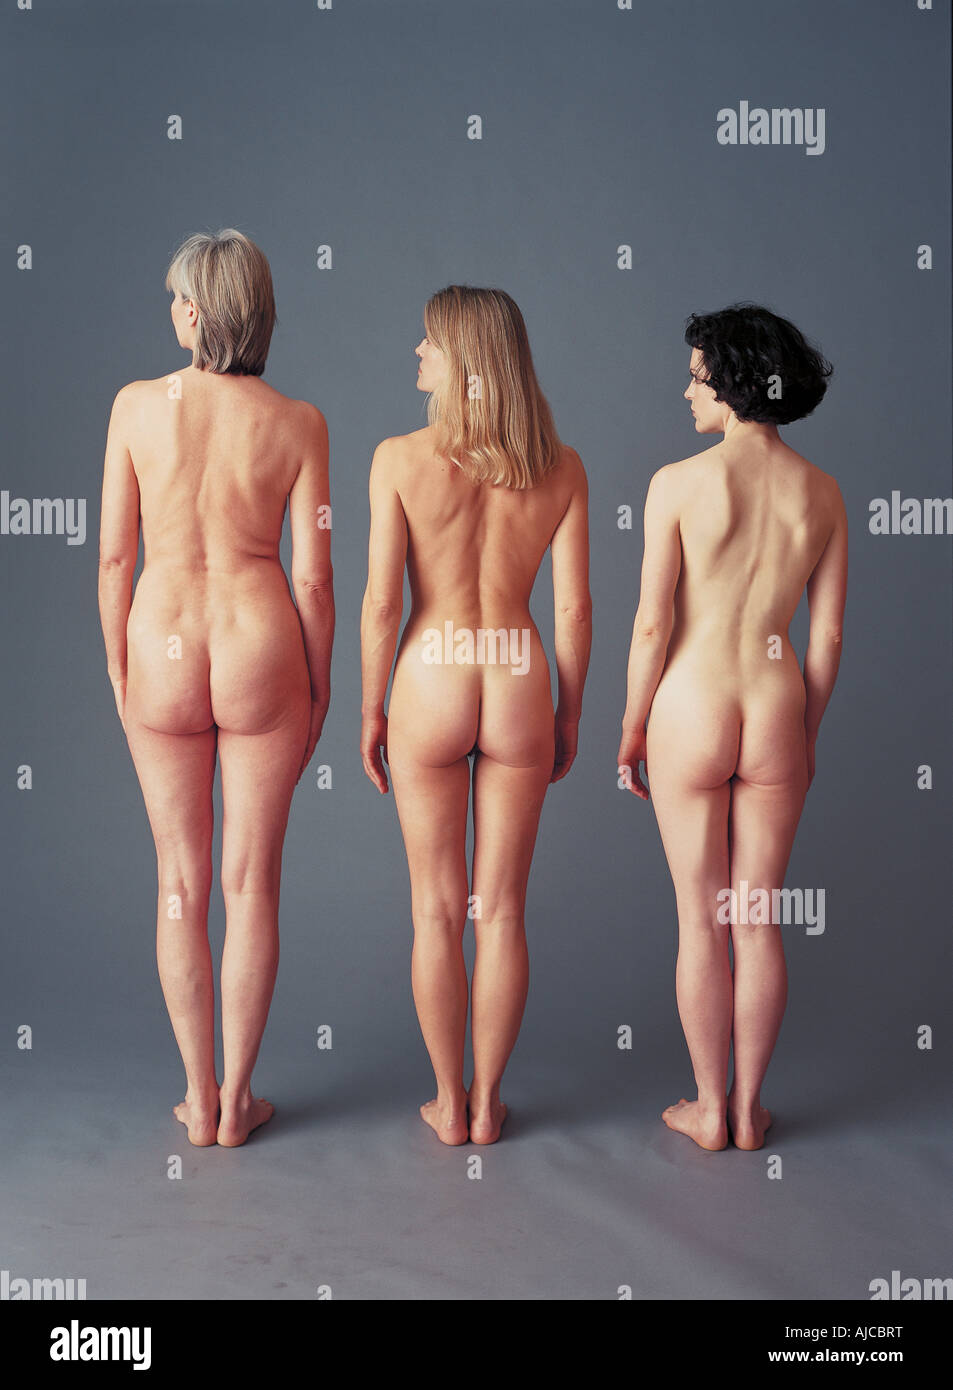 Alamy Stock Fhoto Nude